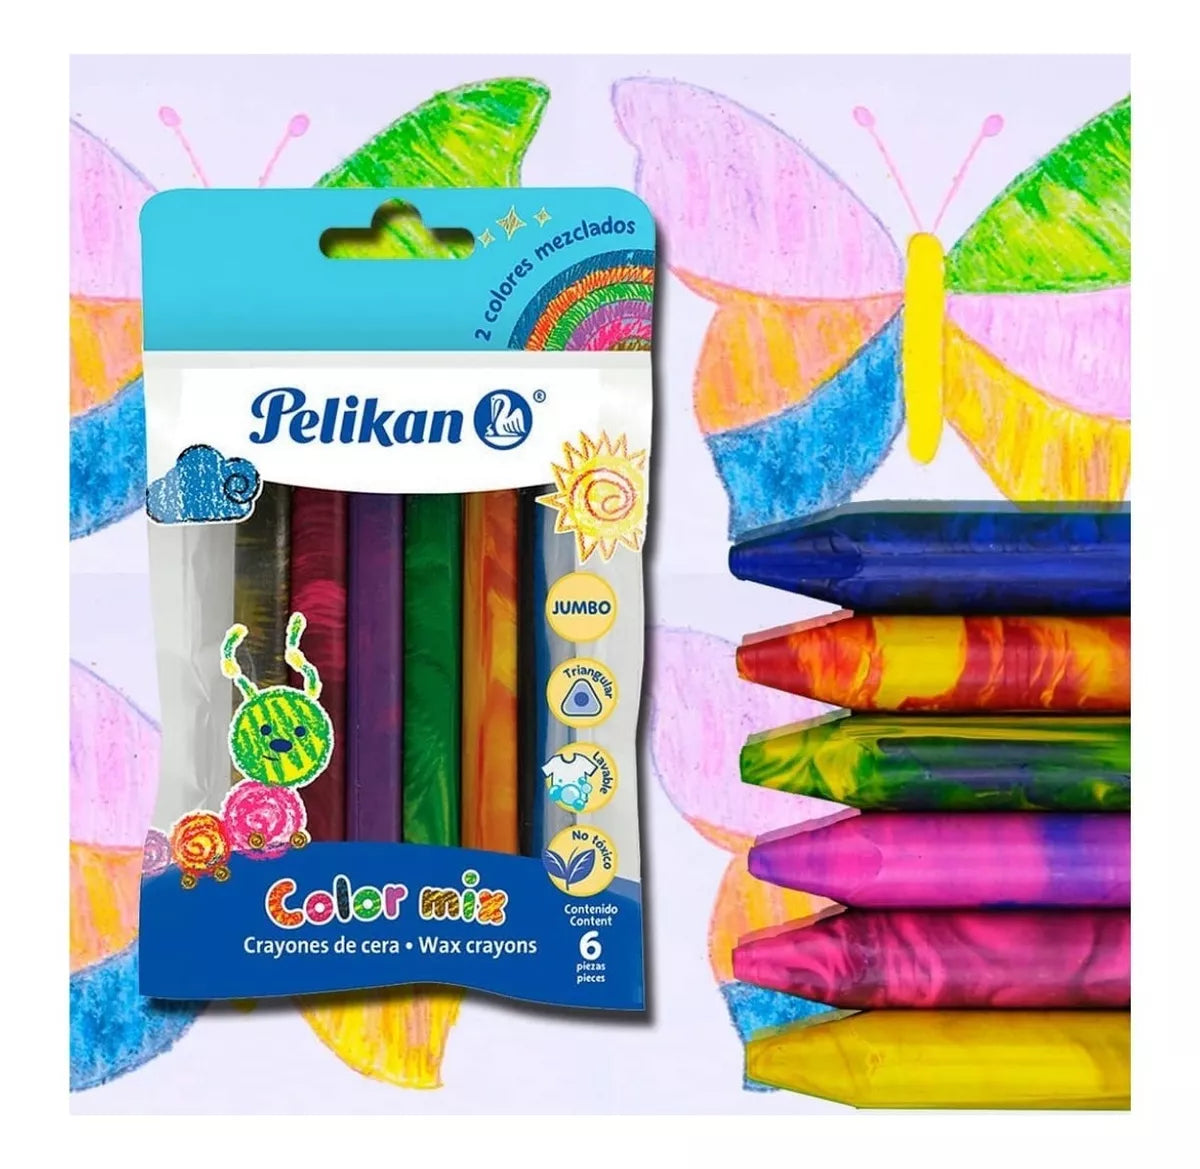 6 Crayon Jumbo Cera Color Mix Pelikan Escolar Niños Dibujo